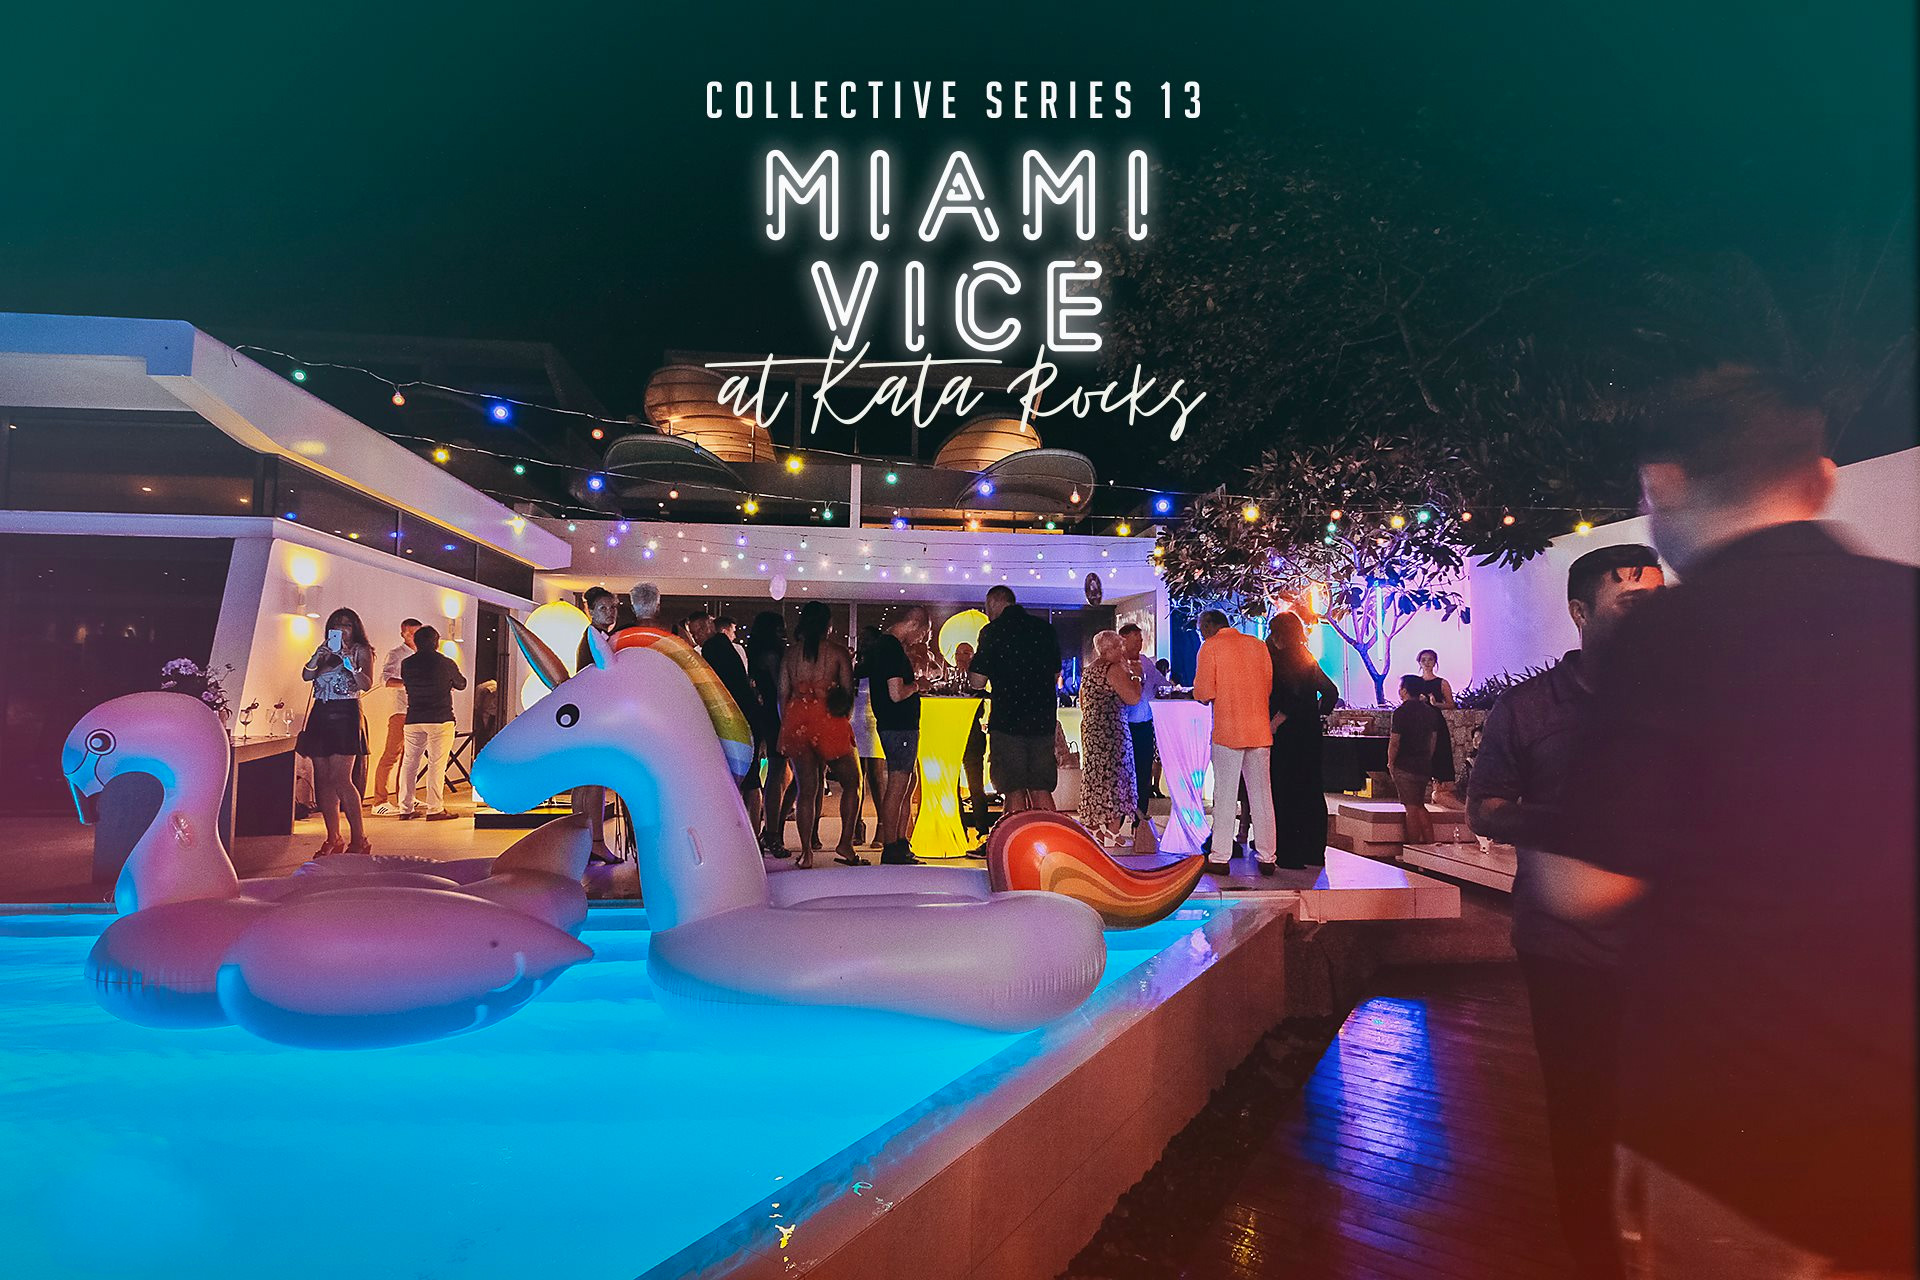 Kata rocks' collective series 13 ‘Miami vice’